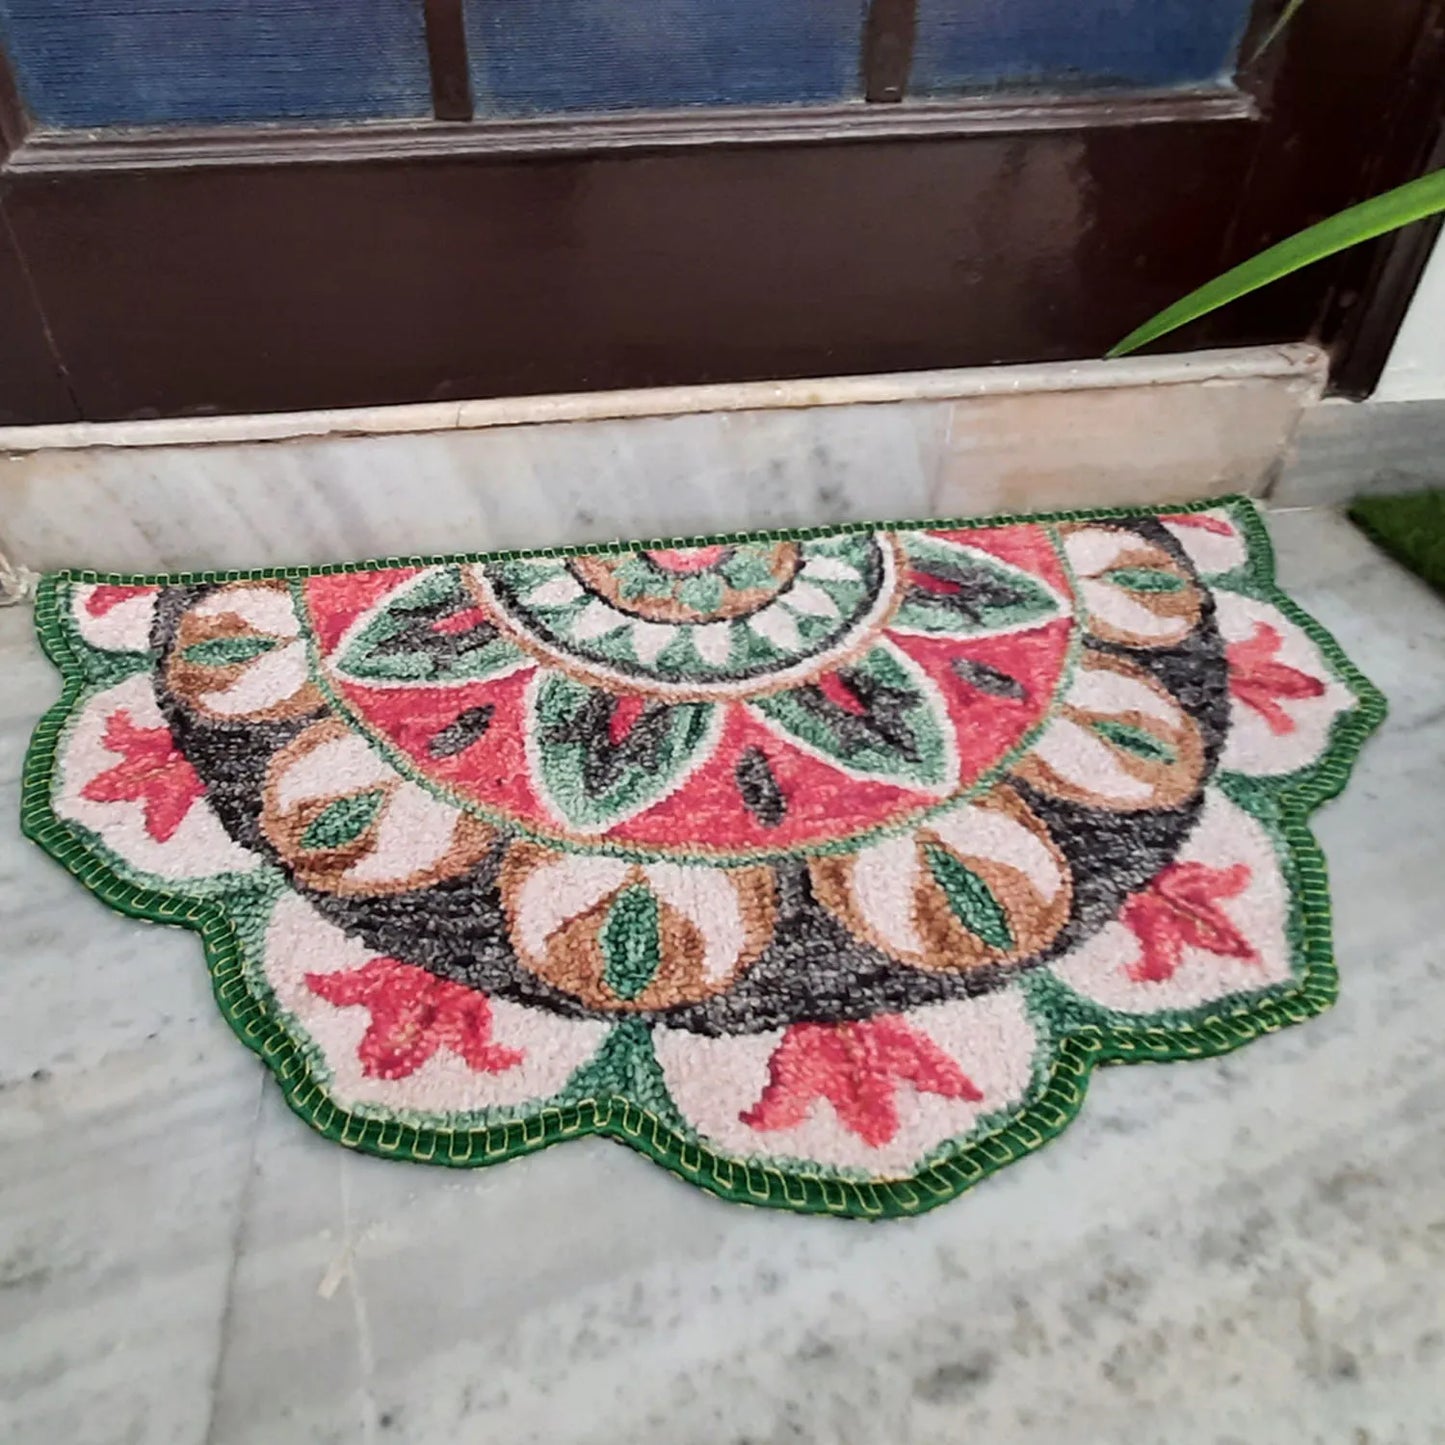 Avioni Home Floor Mats in Beautiful Rangoli Design – Anti Slip, Durable & Washable | Outdoor & Indoor